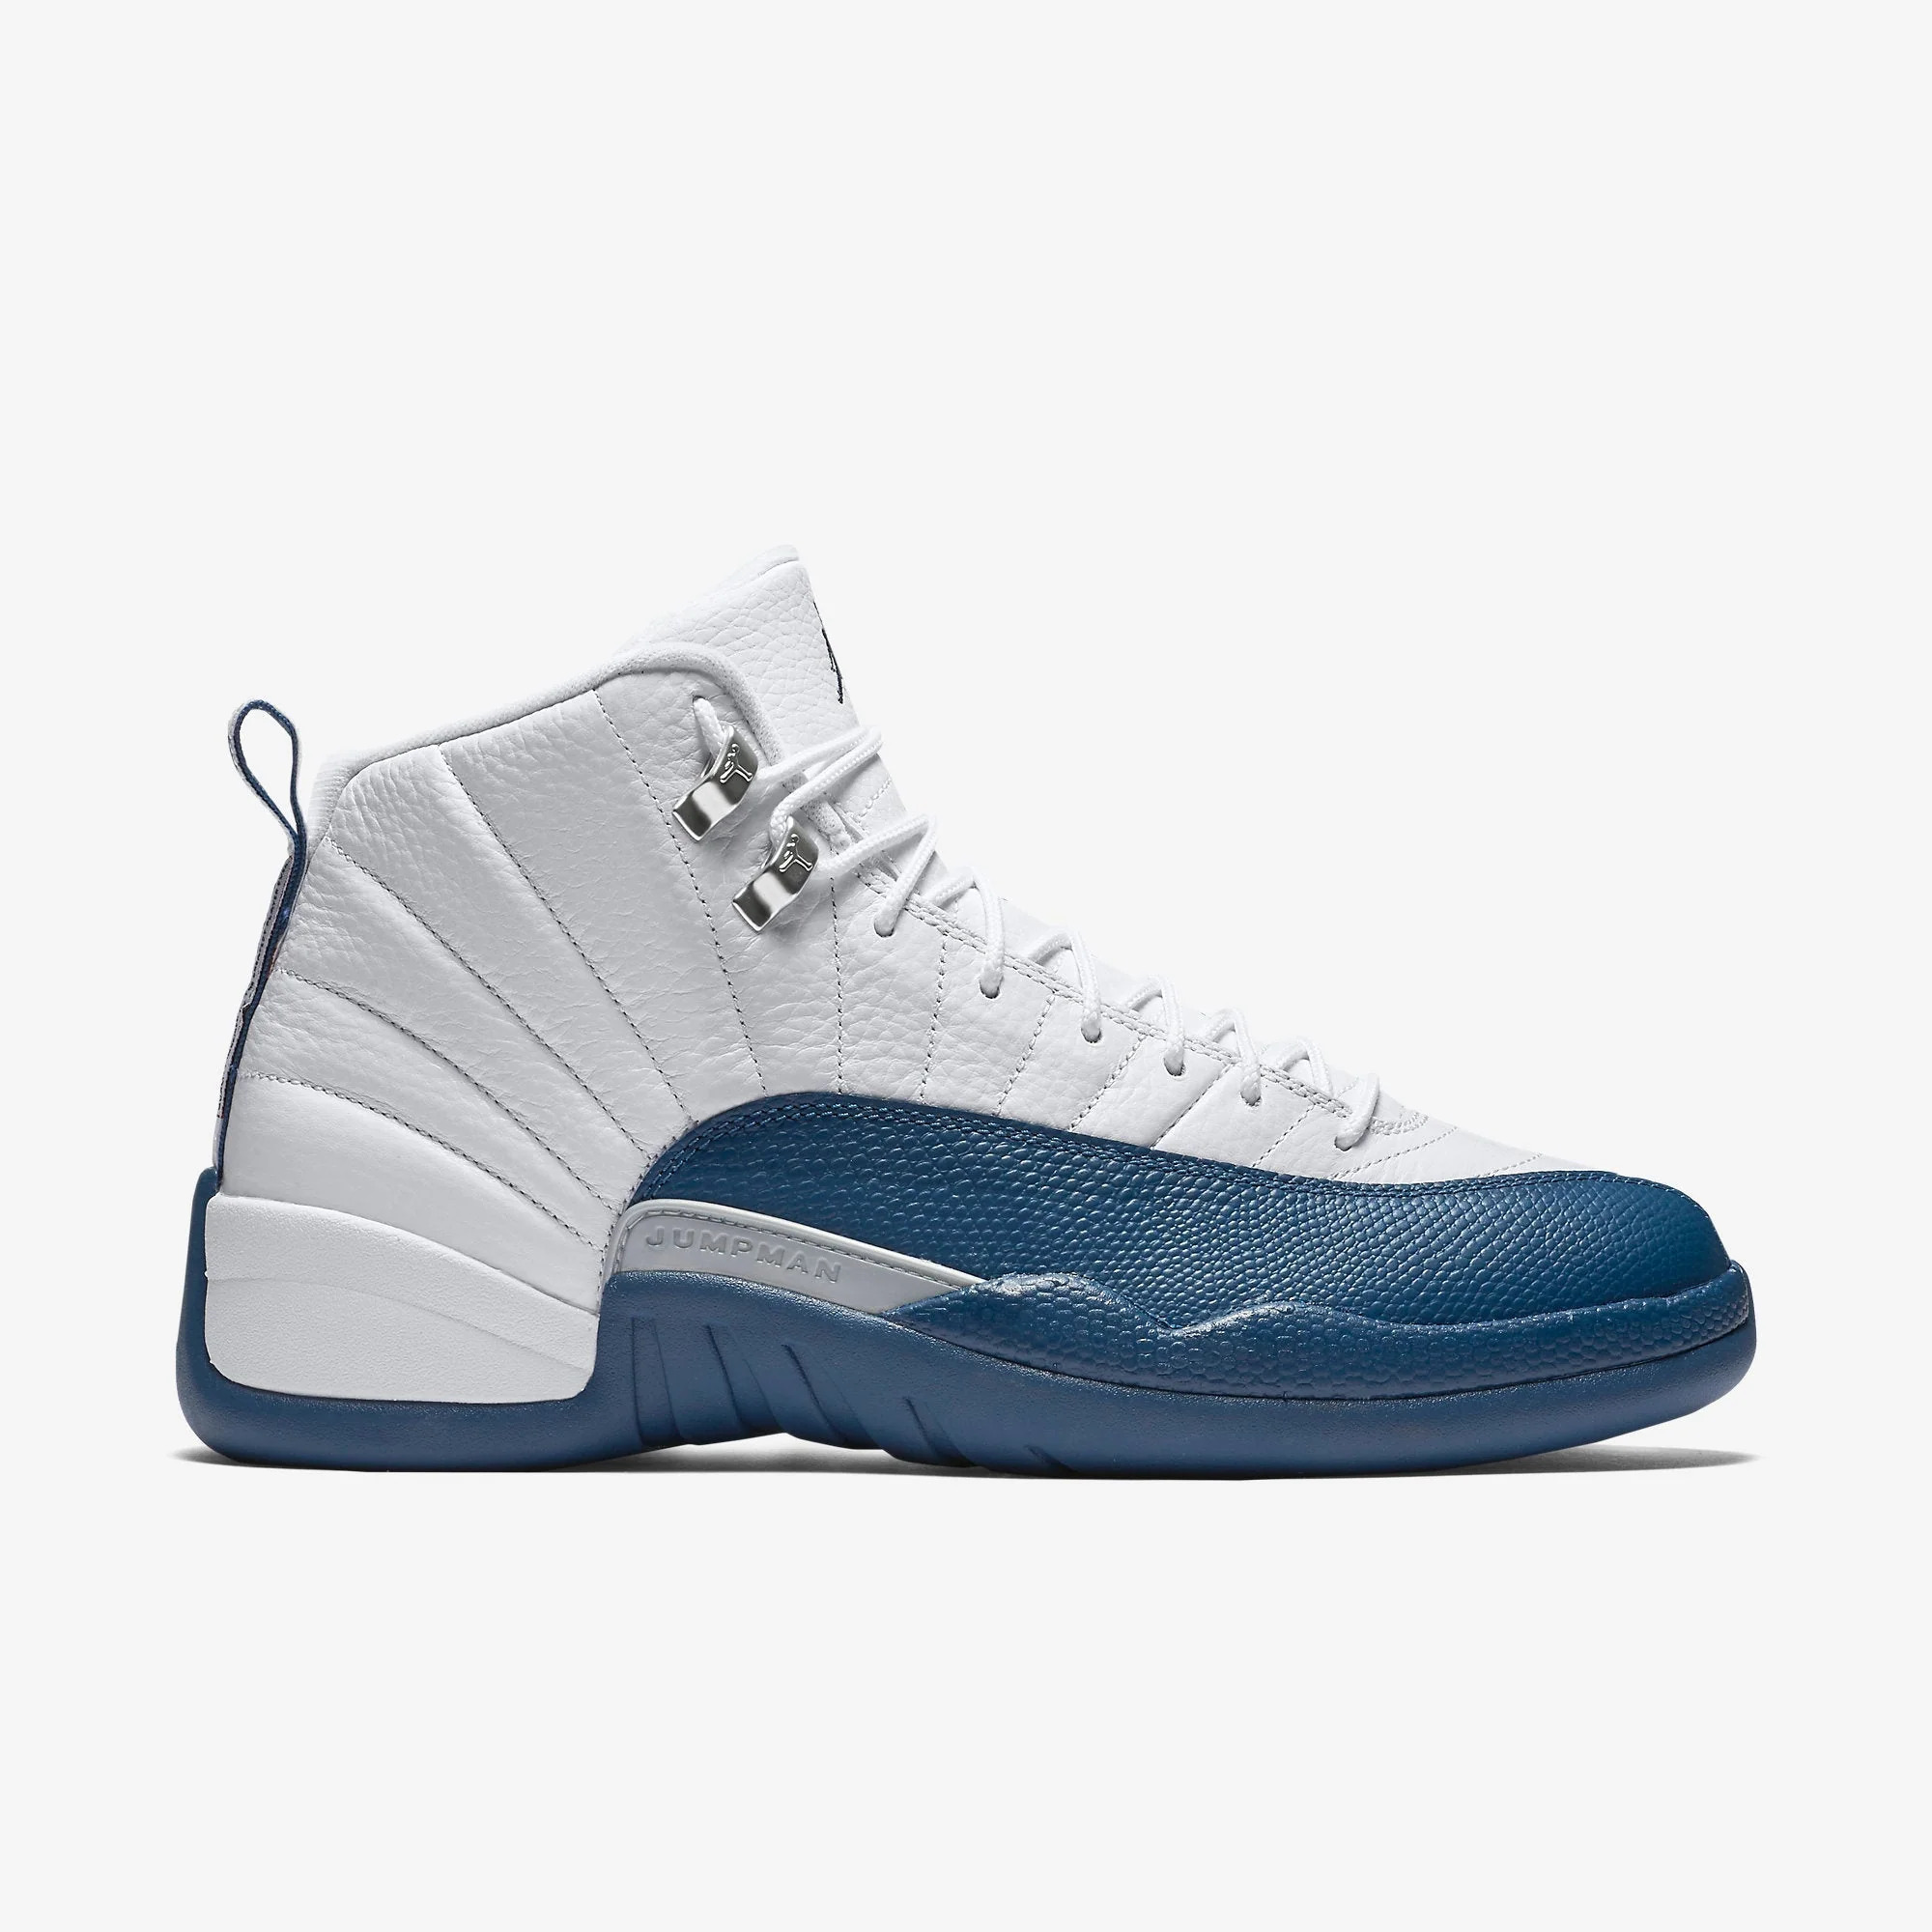 Nike Mens Air Jordan 12 Retro "French Blue" White/Metallic Silver 130690-113 - image 2 of 6